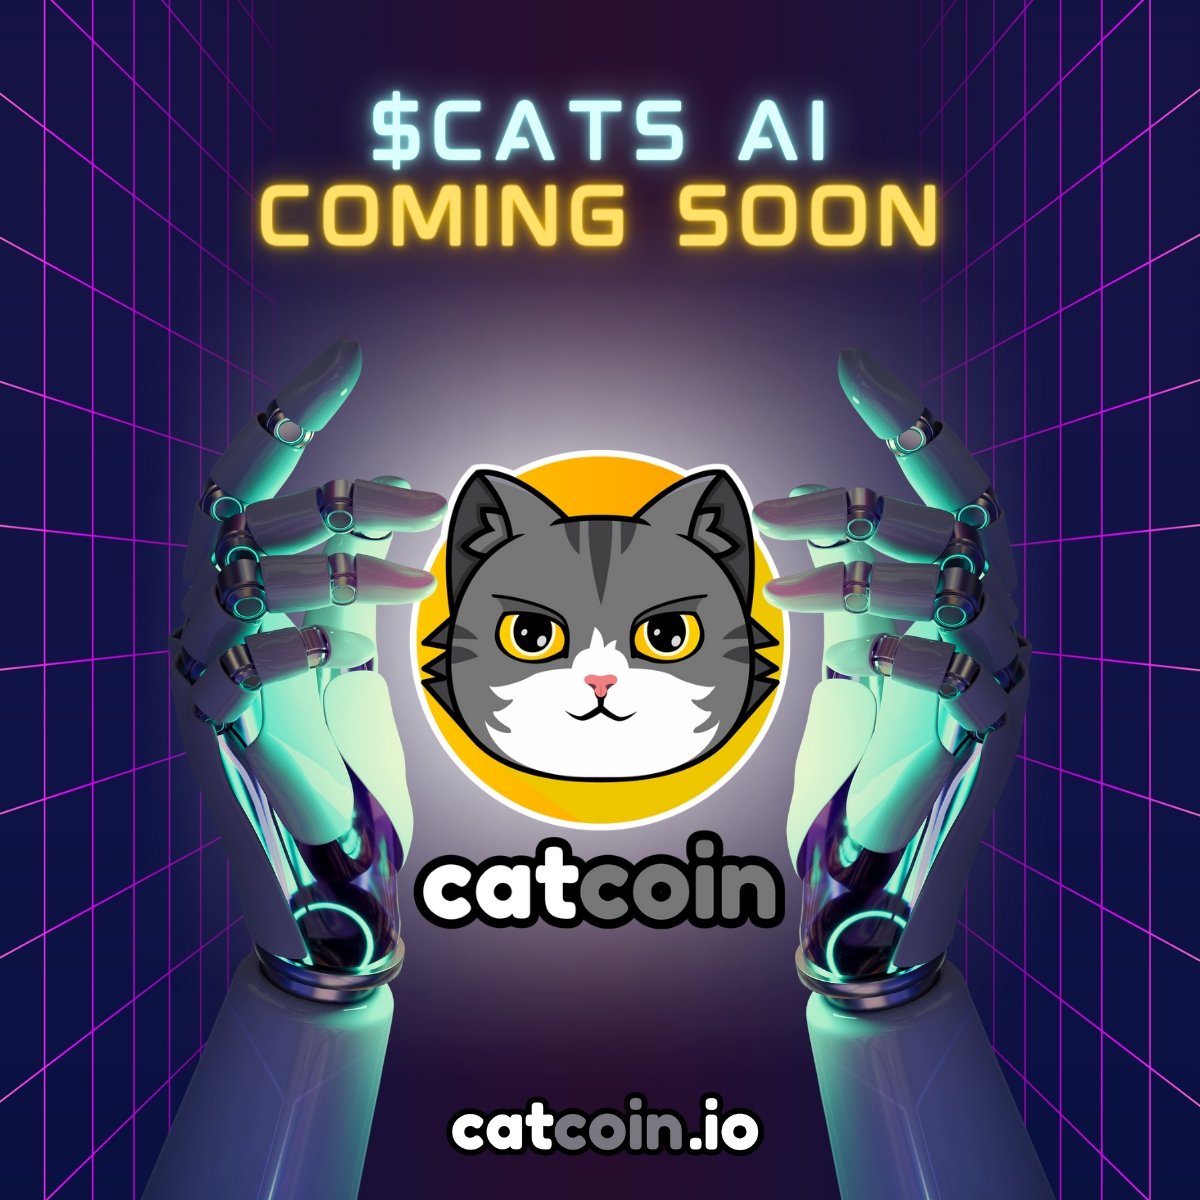 #Catcoin AI is coming to $CATS 👀🔥 #Catcoin  catcoin.io 
#CatcoinArmy